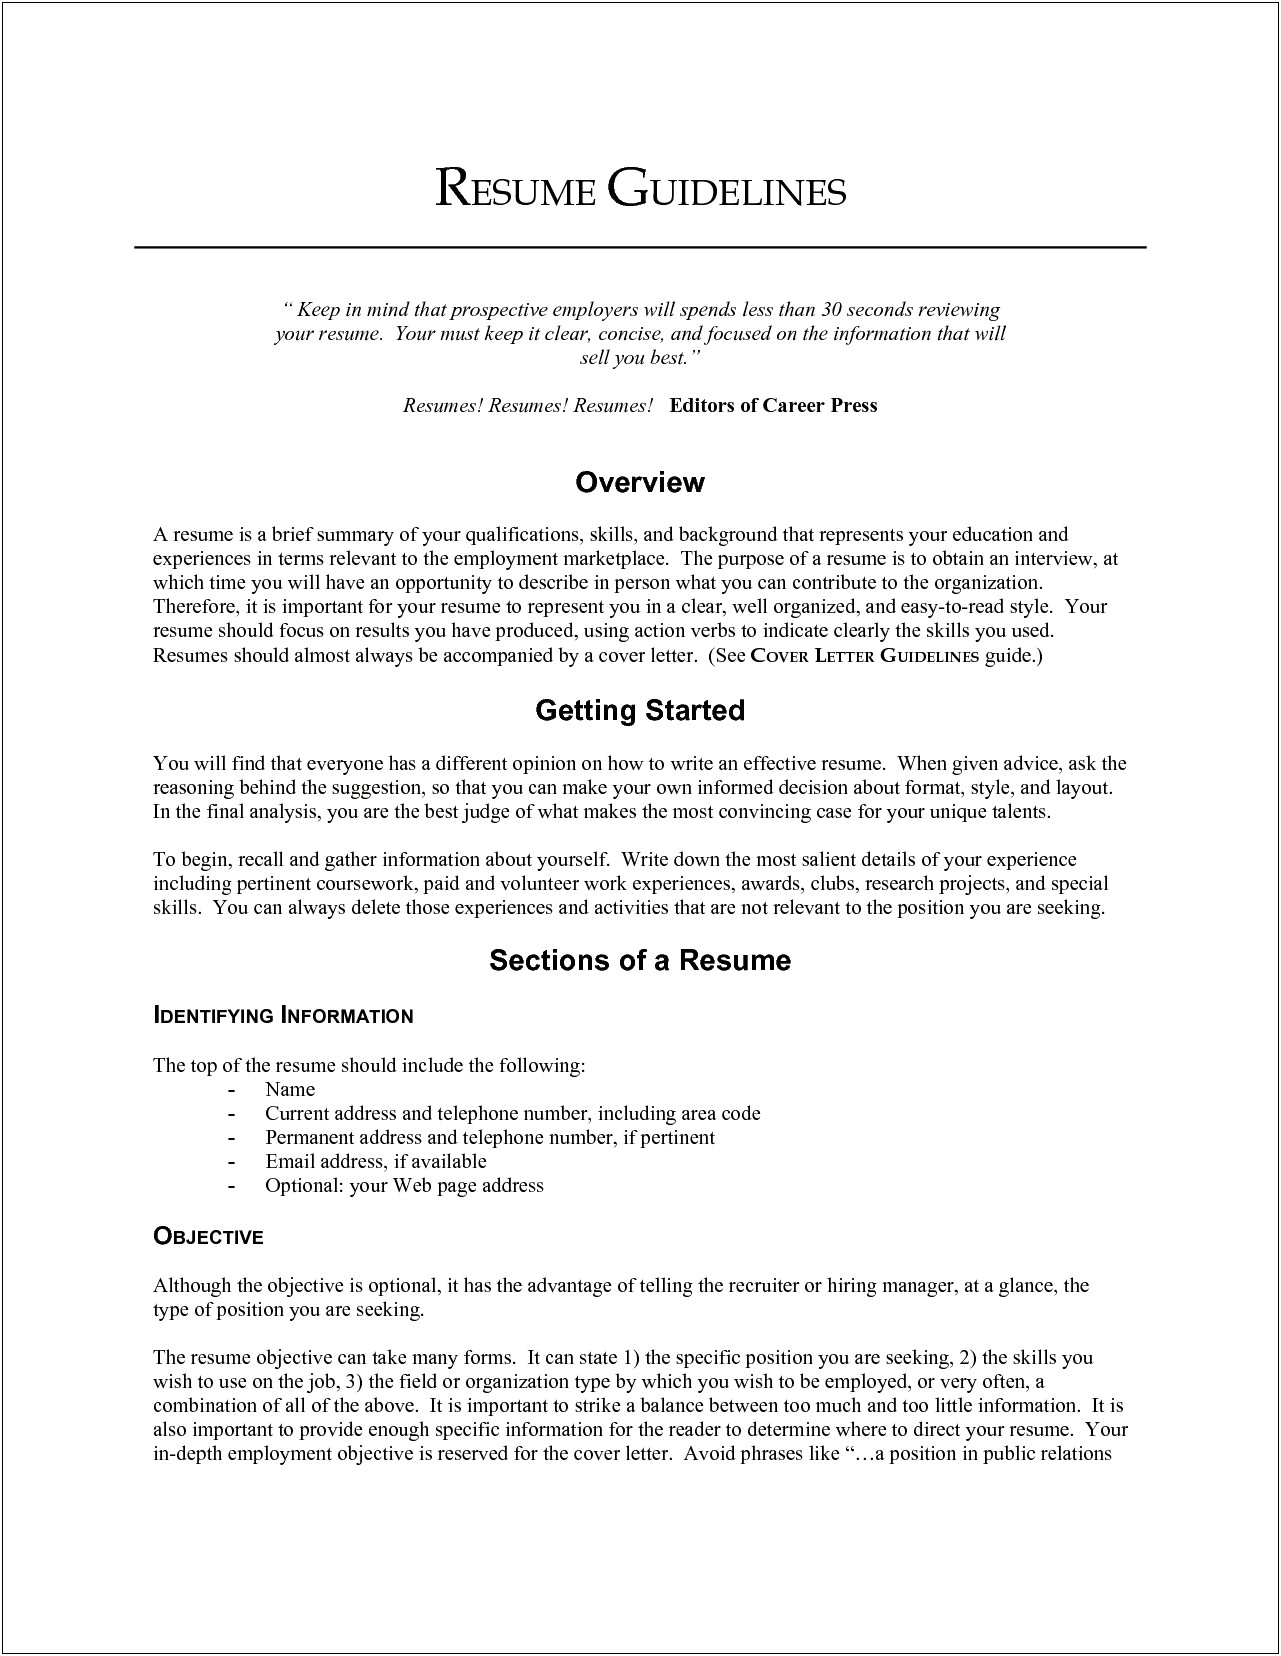 Resume Career Objective Cover Letter